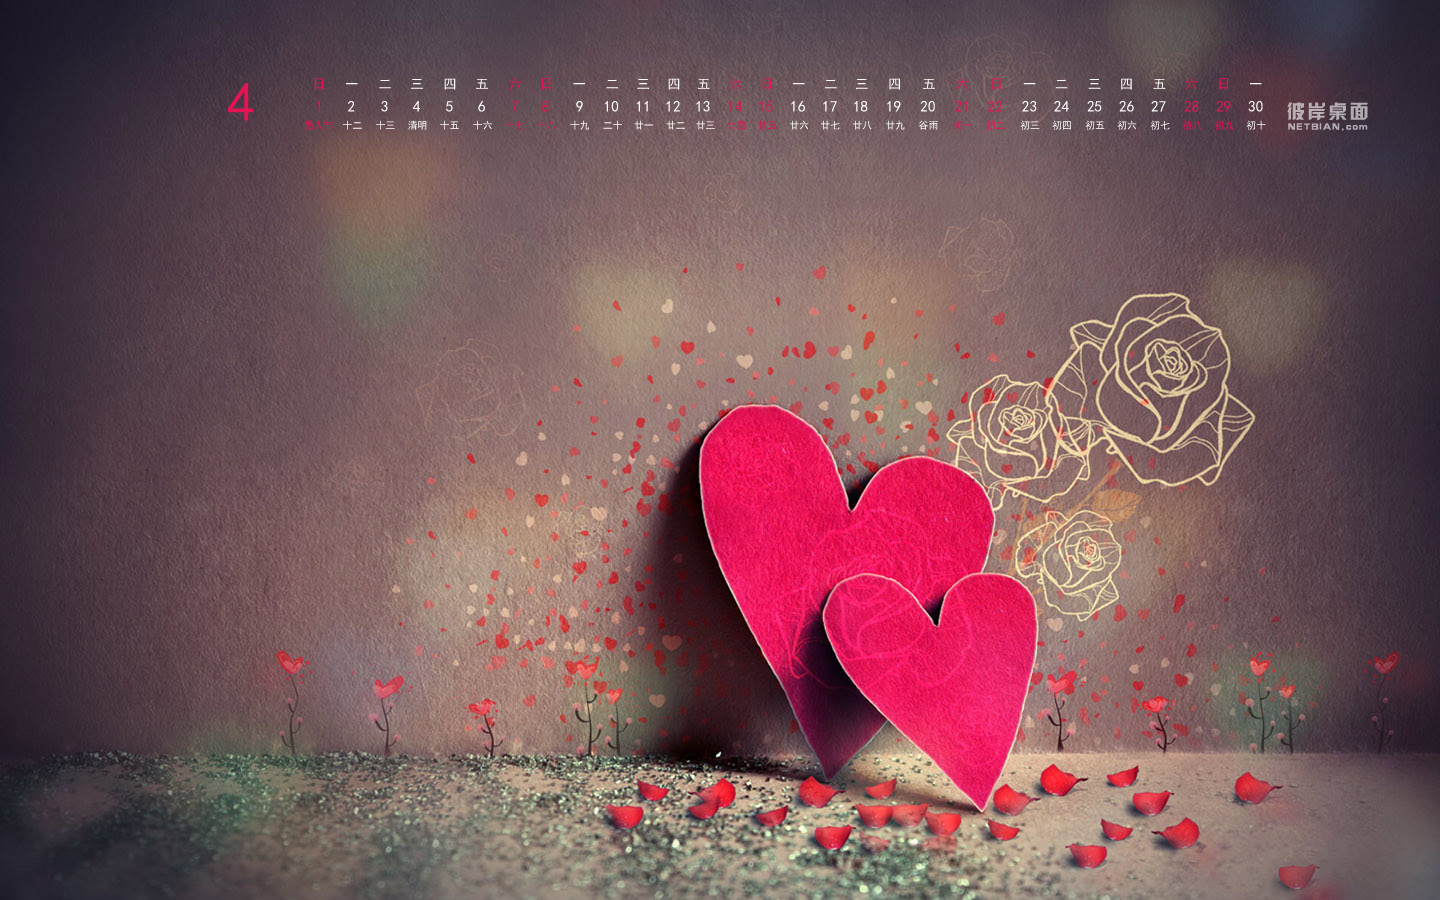 Waiting for your heart April 2012 calendar desktop